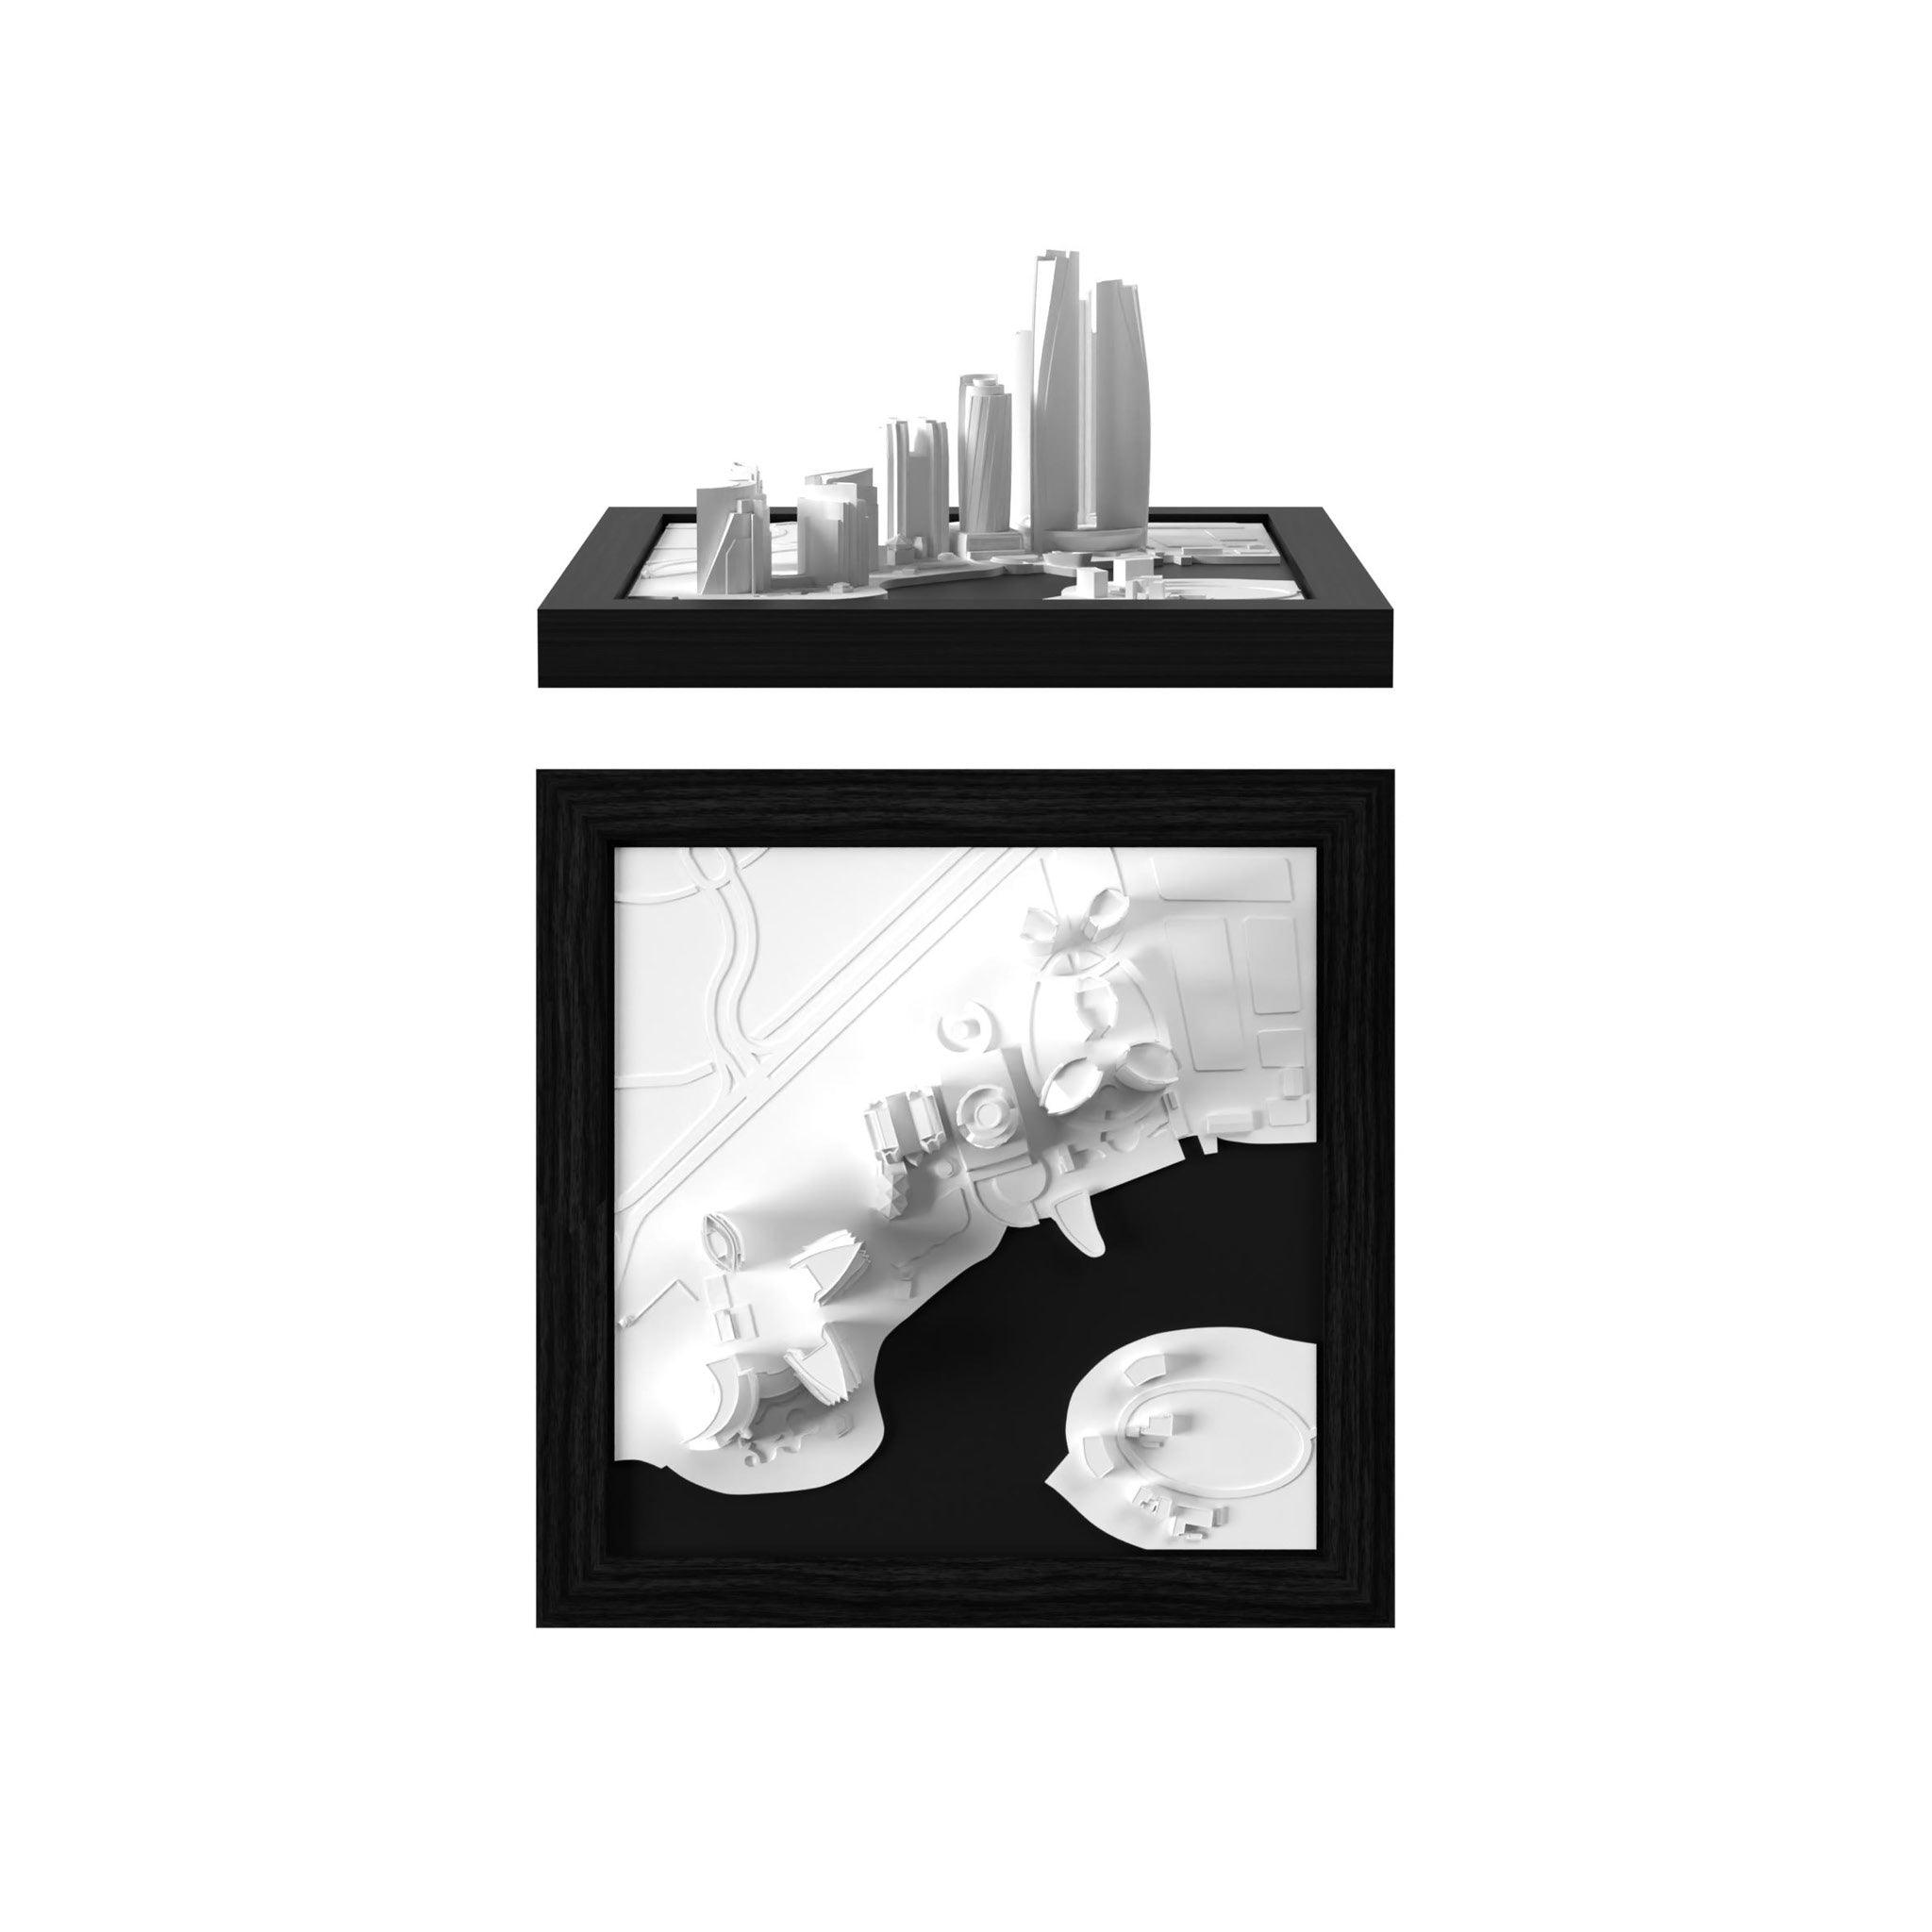 Abu Dhabi 3D City Model Cube, Middle East - CITYFRAMES